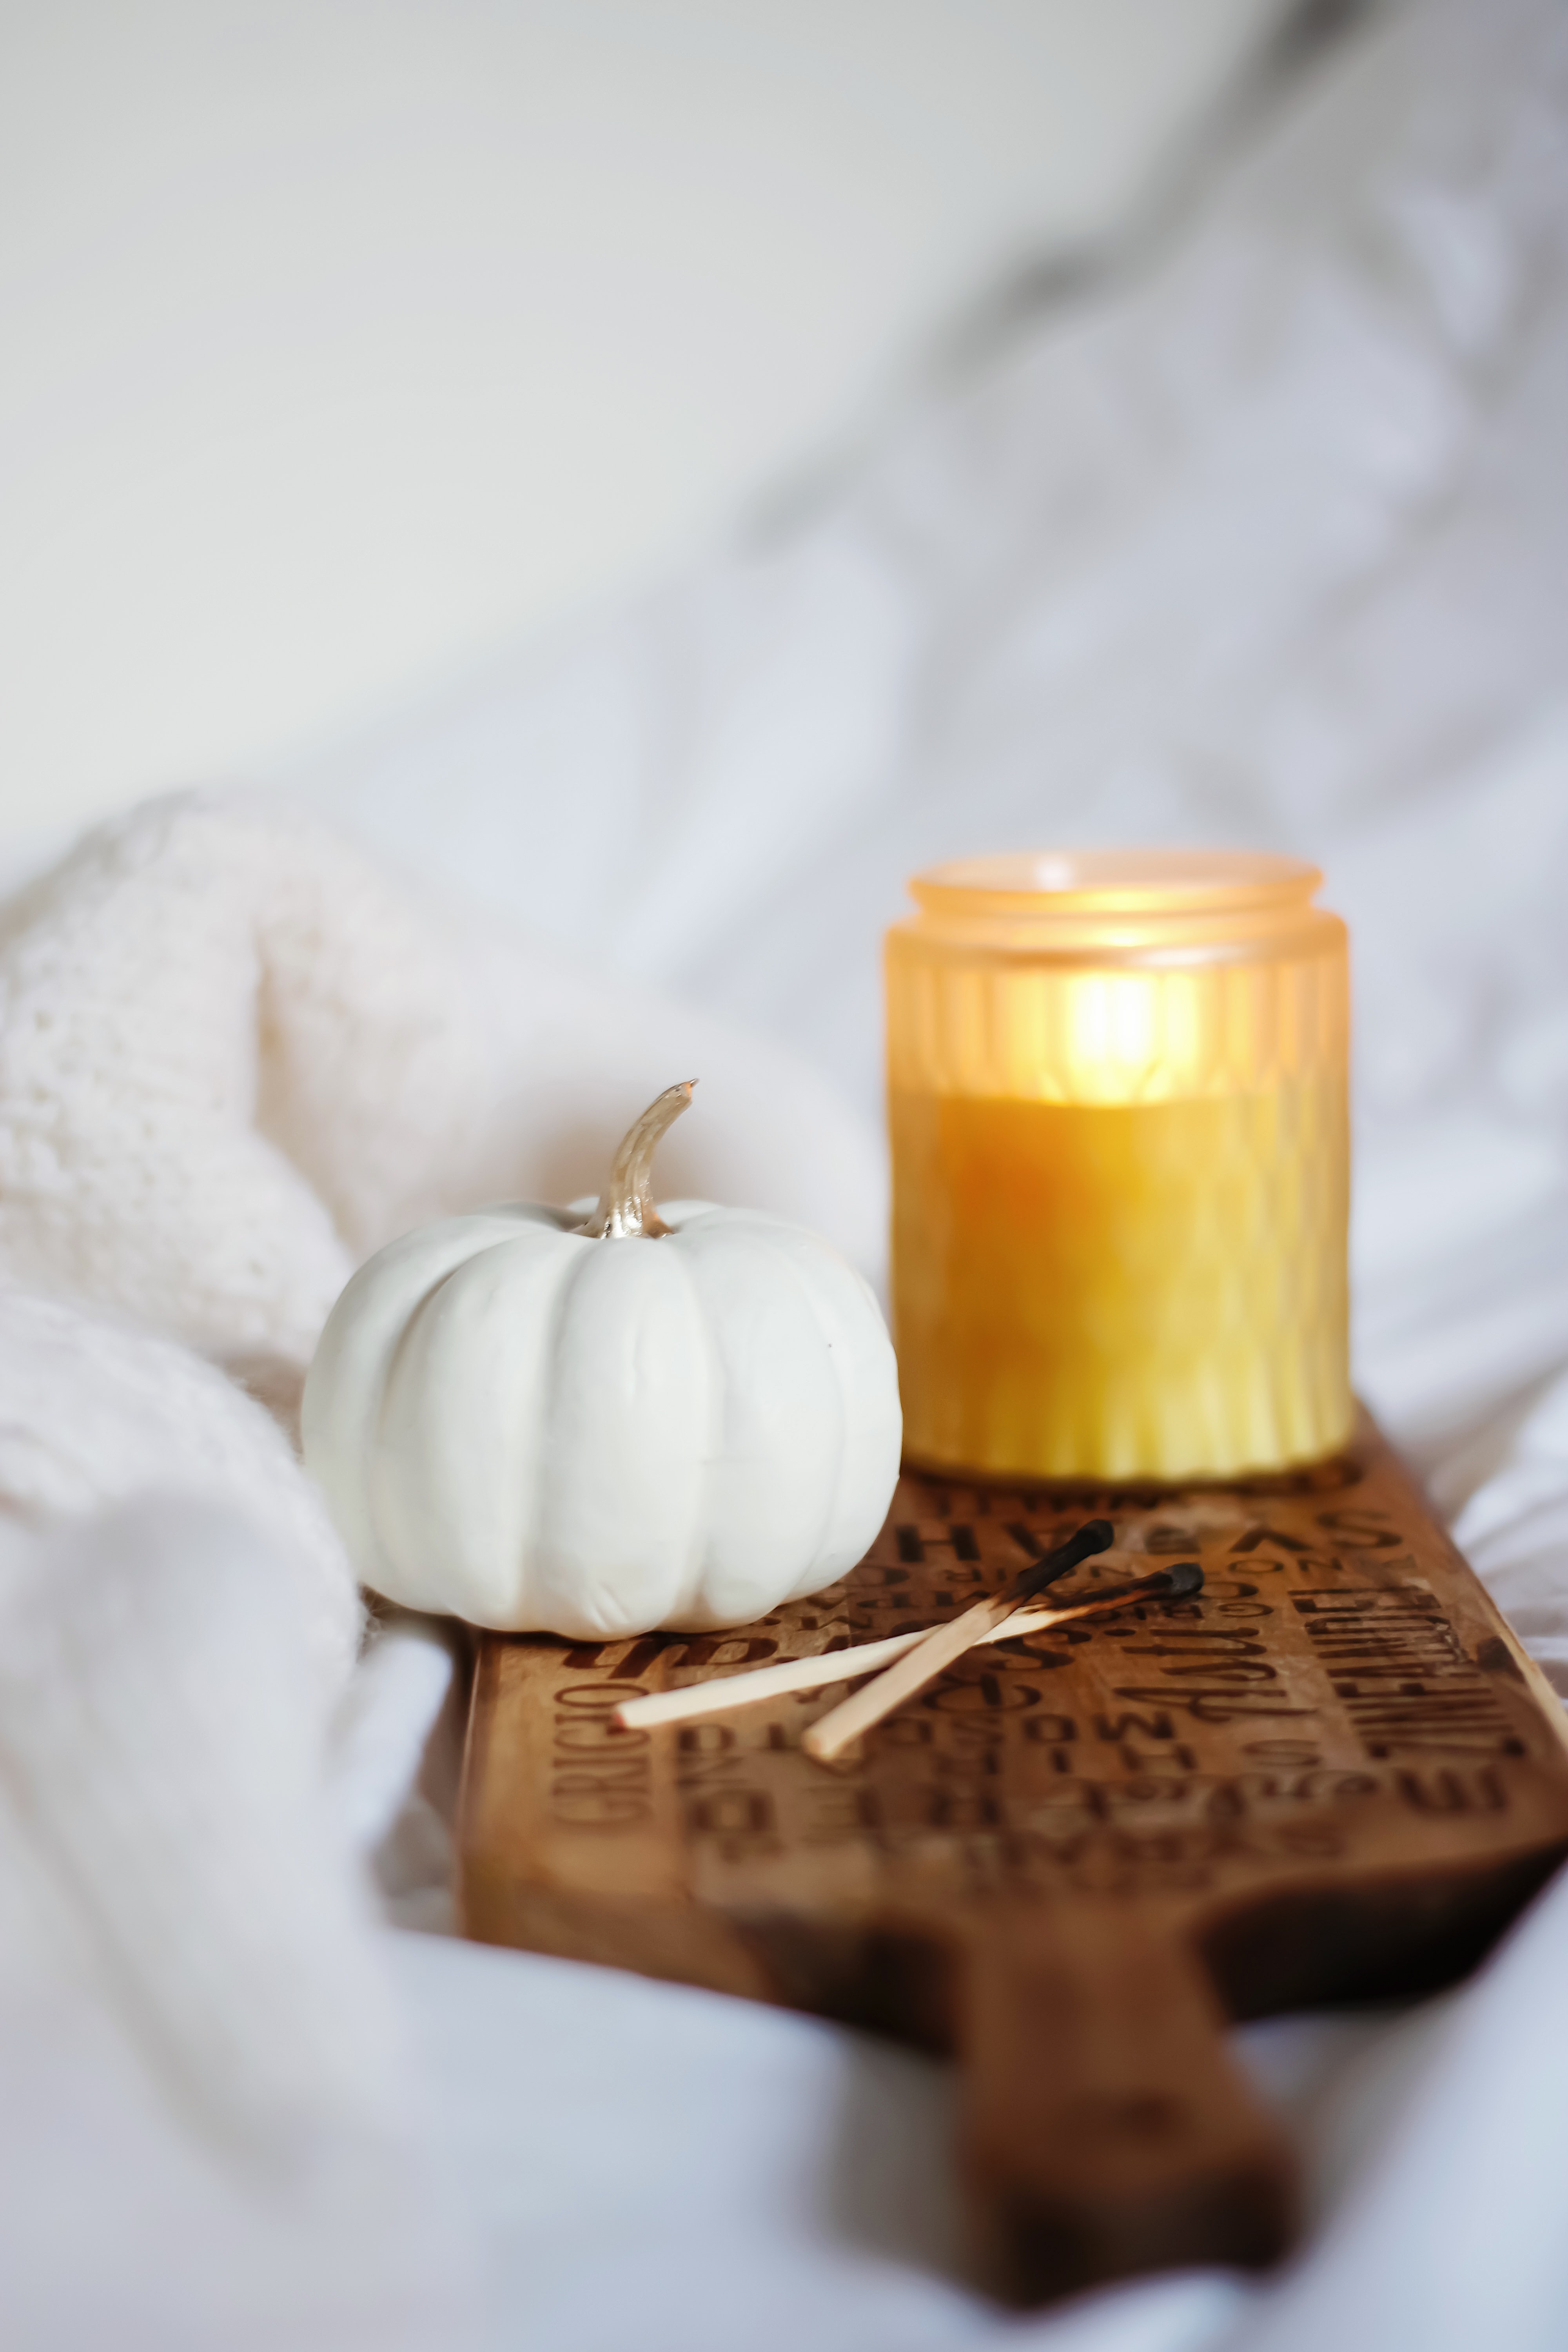 pumpkin, miscellanea, miscellaneous, decoration, board, candle, matches